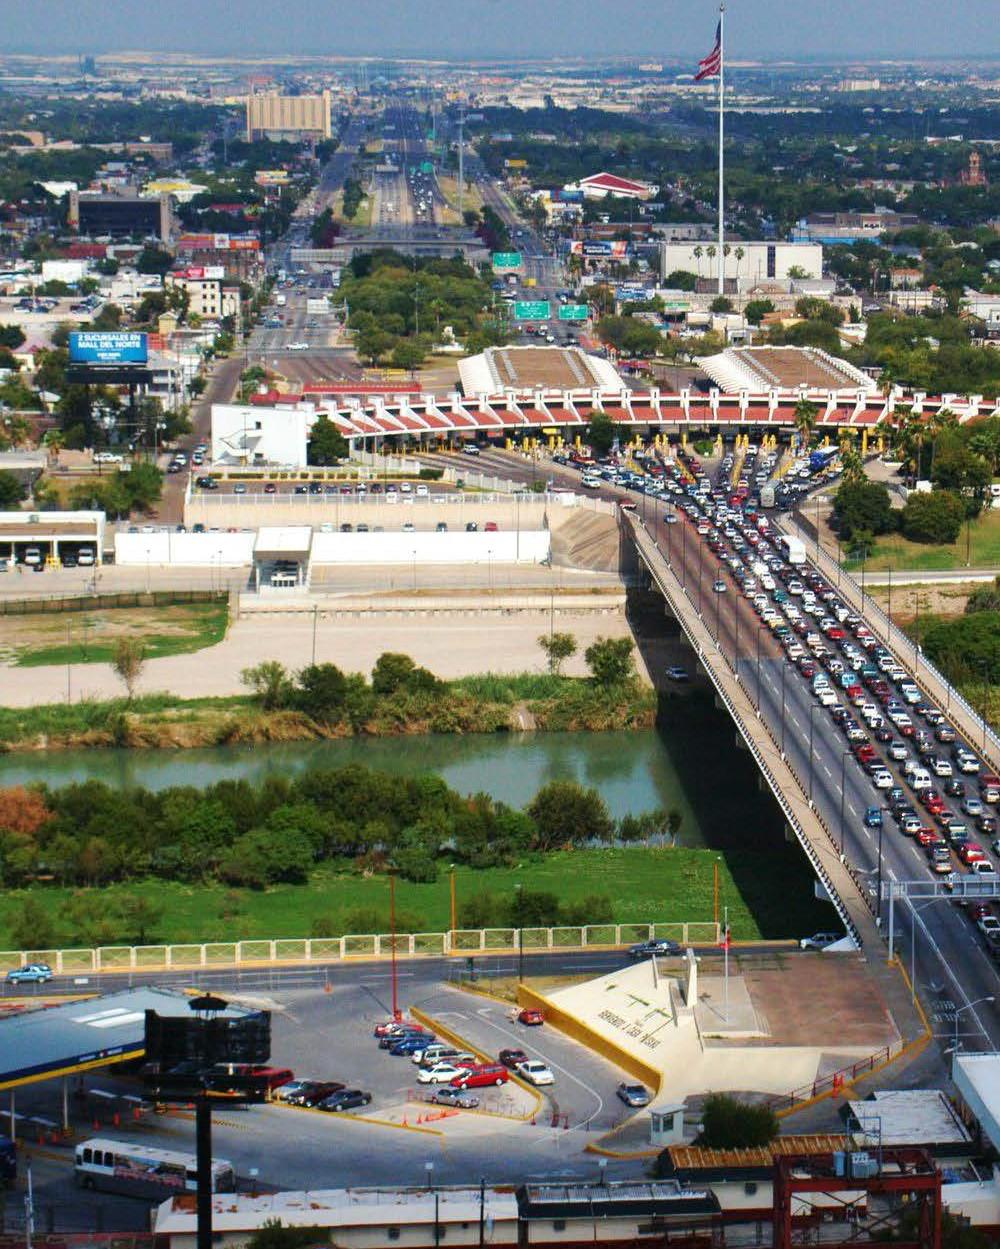 Laredo Texas Area Overview Laredo is the county seat of We bb Coun ty, Texas, United States, locate d on the n or th bank of the Rio Gra nde in South Texas, across from Nuevo Laredo, Tamaulipas,